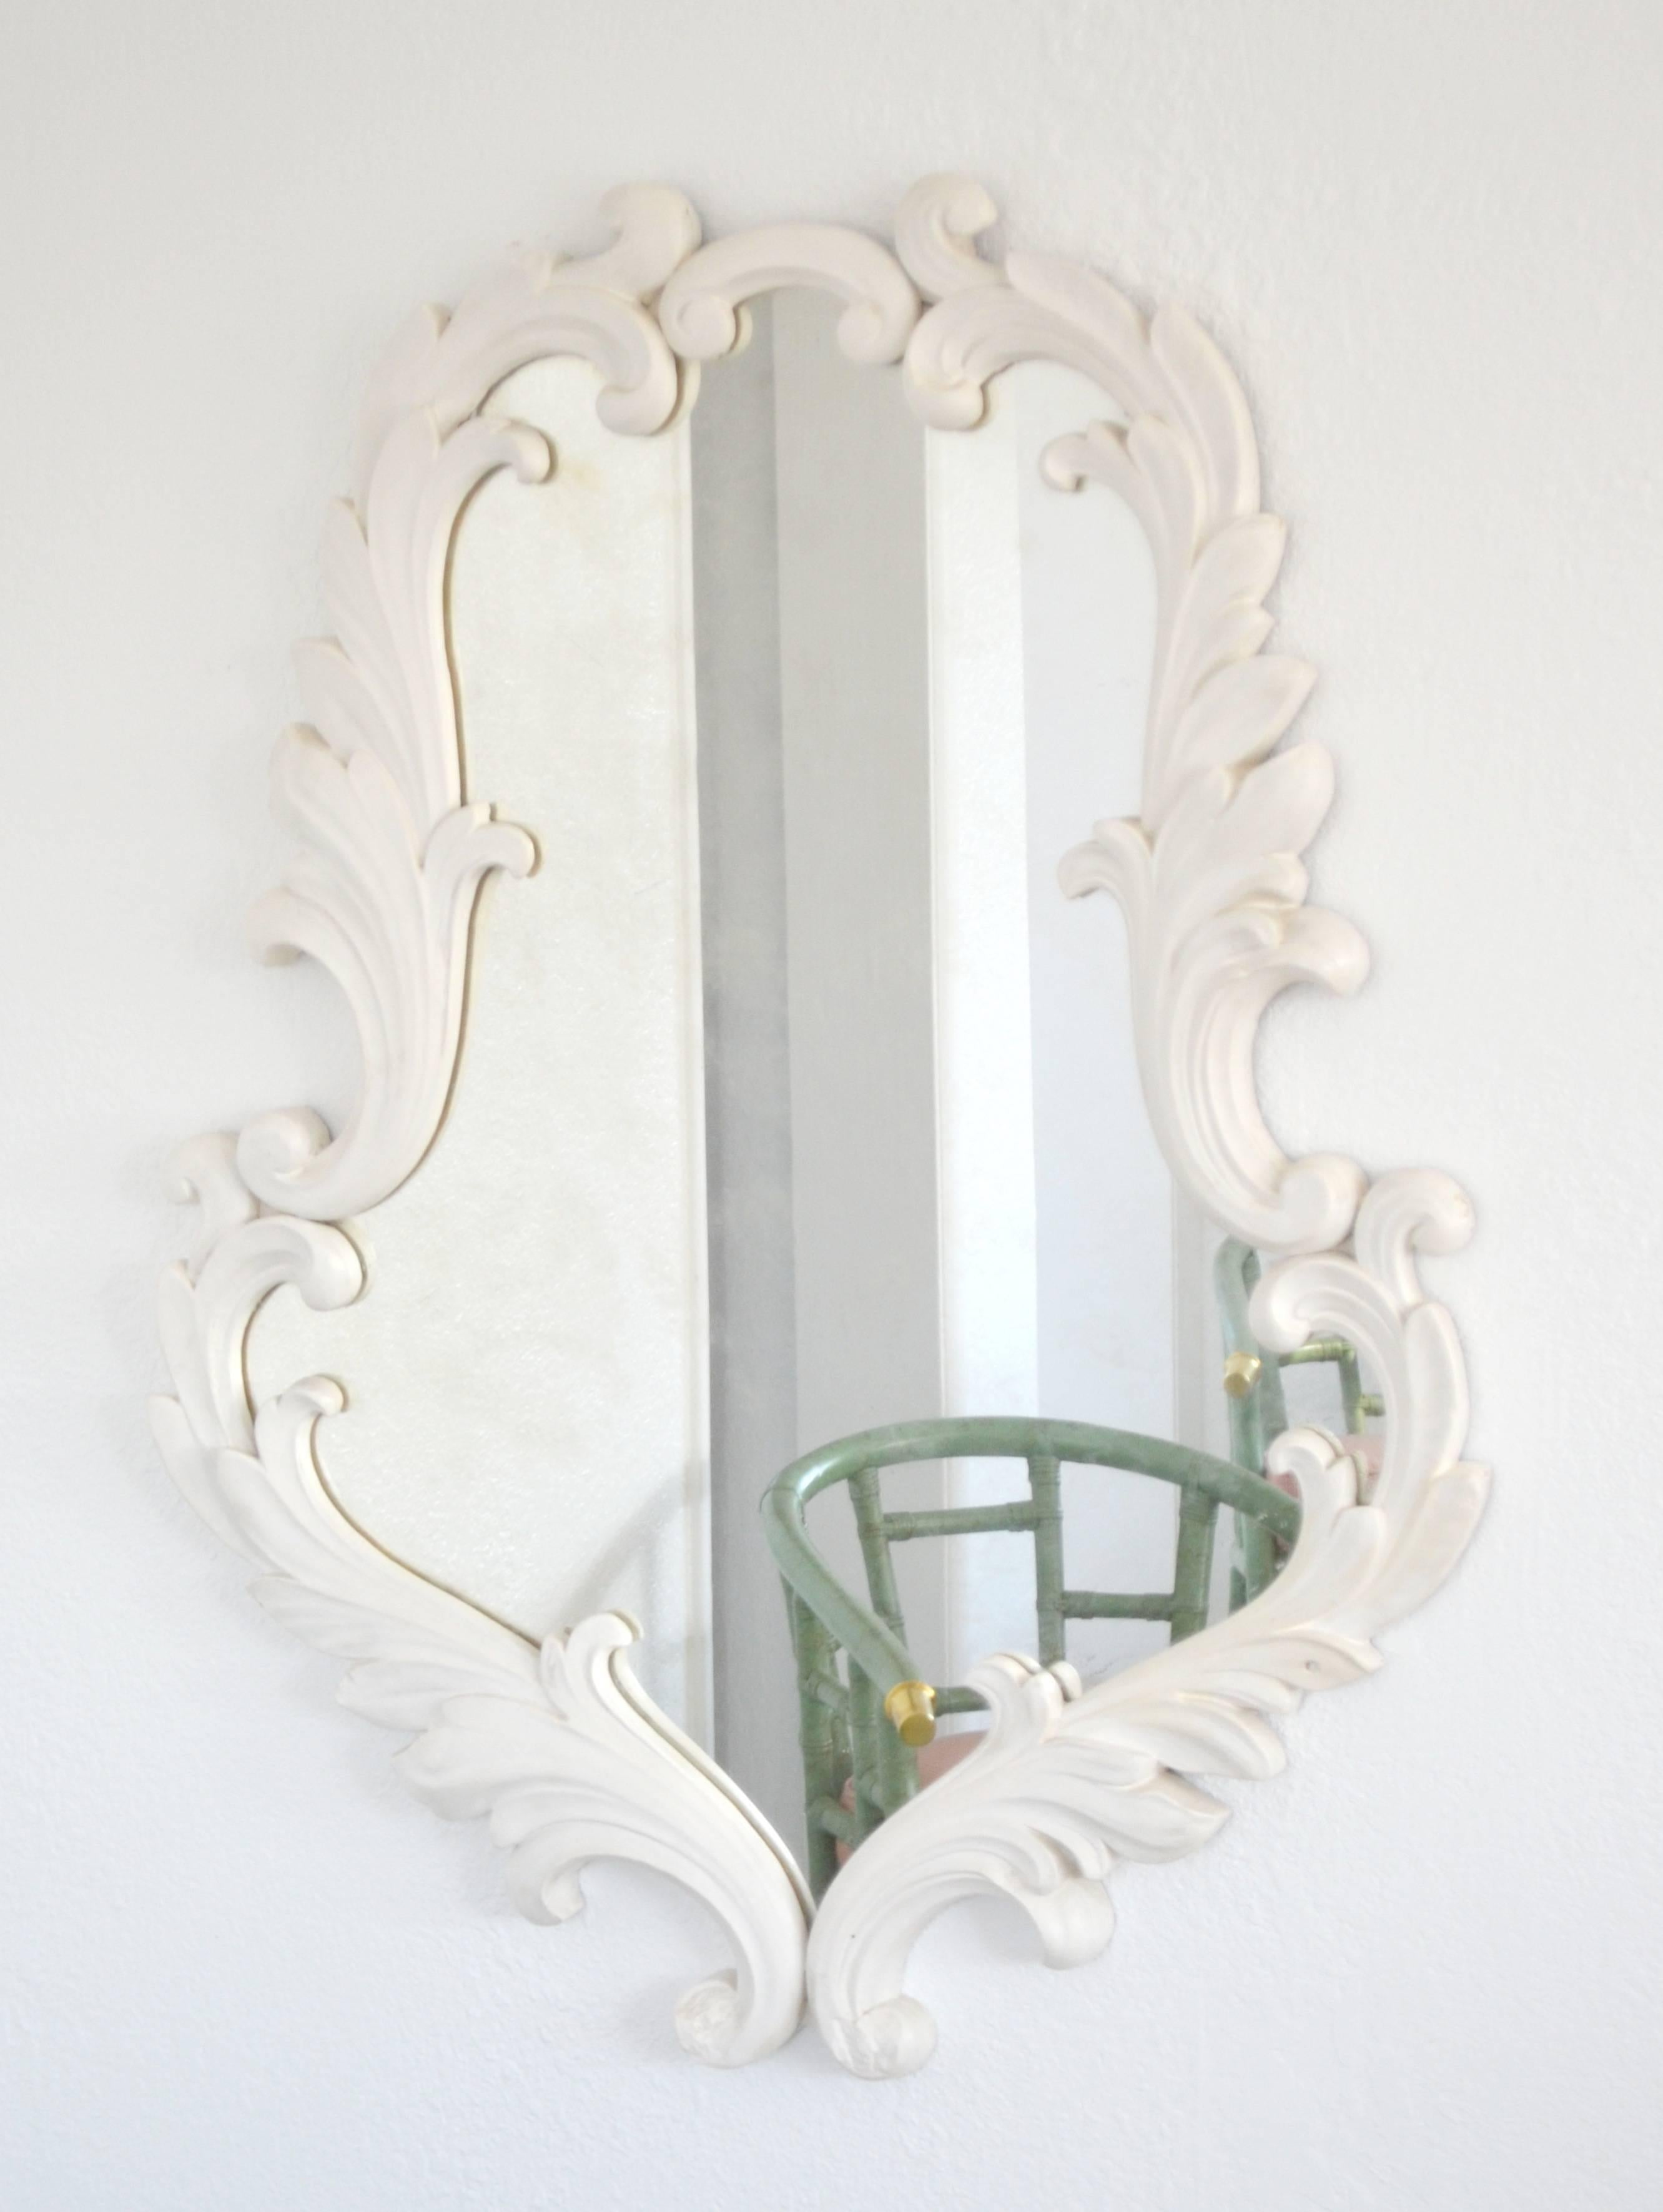 American Hollywood Regency White Gessoed Carved Oak Wall Mirror For Sale